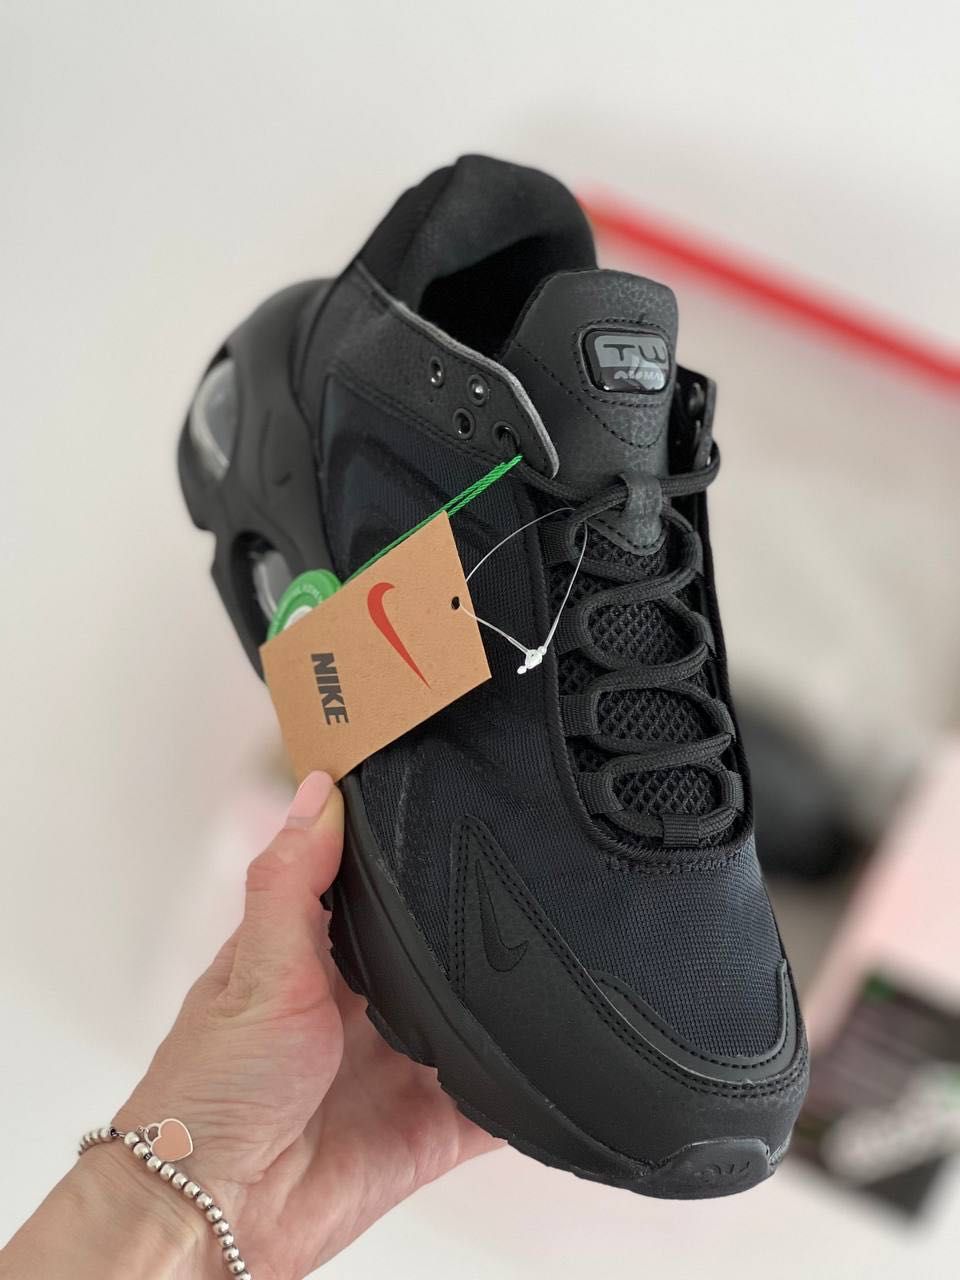 Мужские кроссовки Nike Air Max TW Black. Размеры 40-45